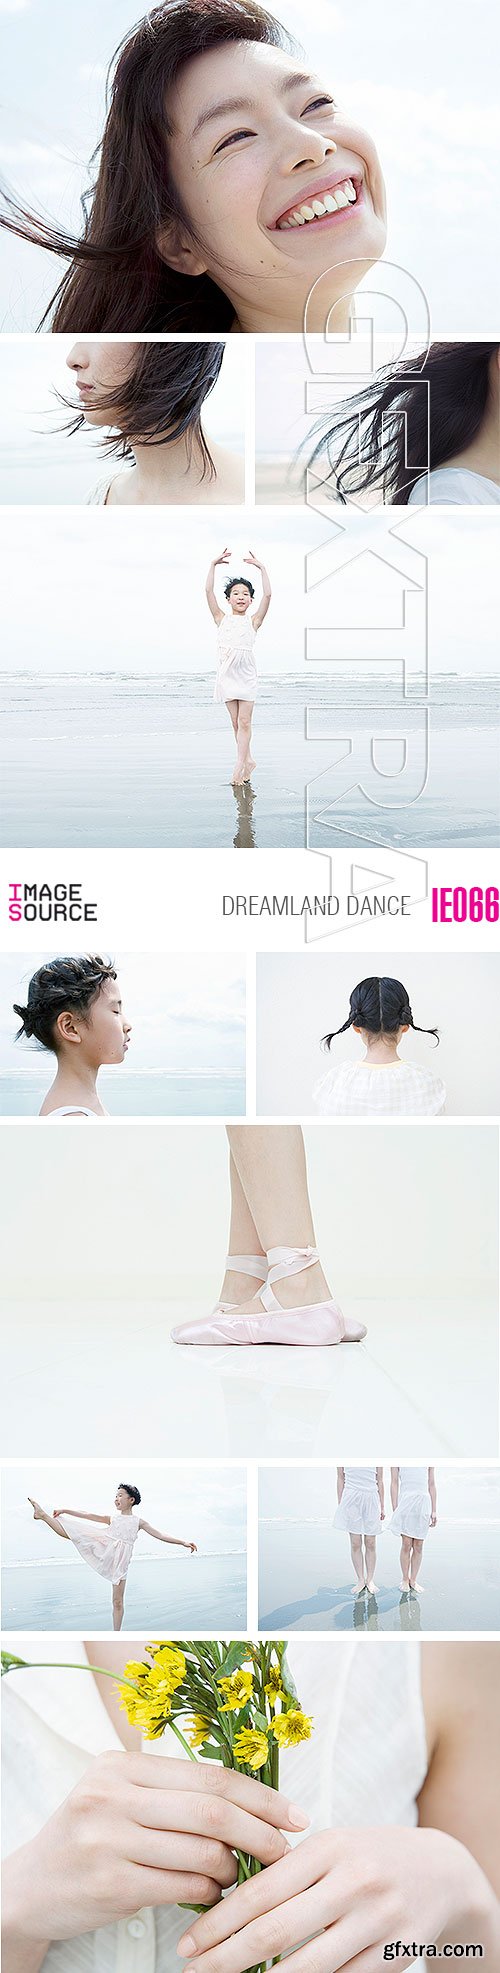 Image Source IE066 Dreamland Dance